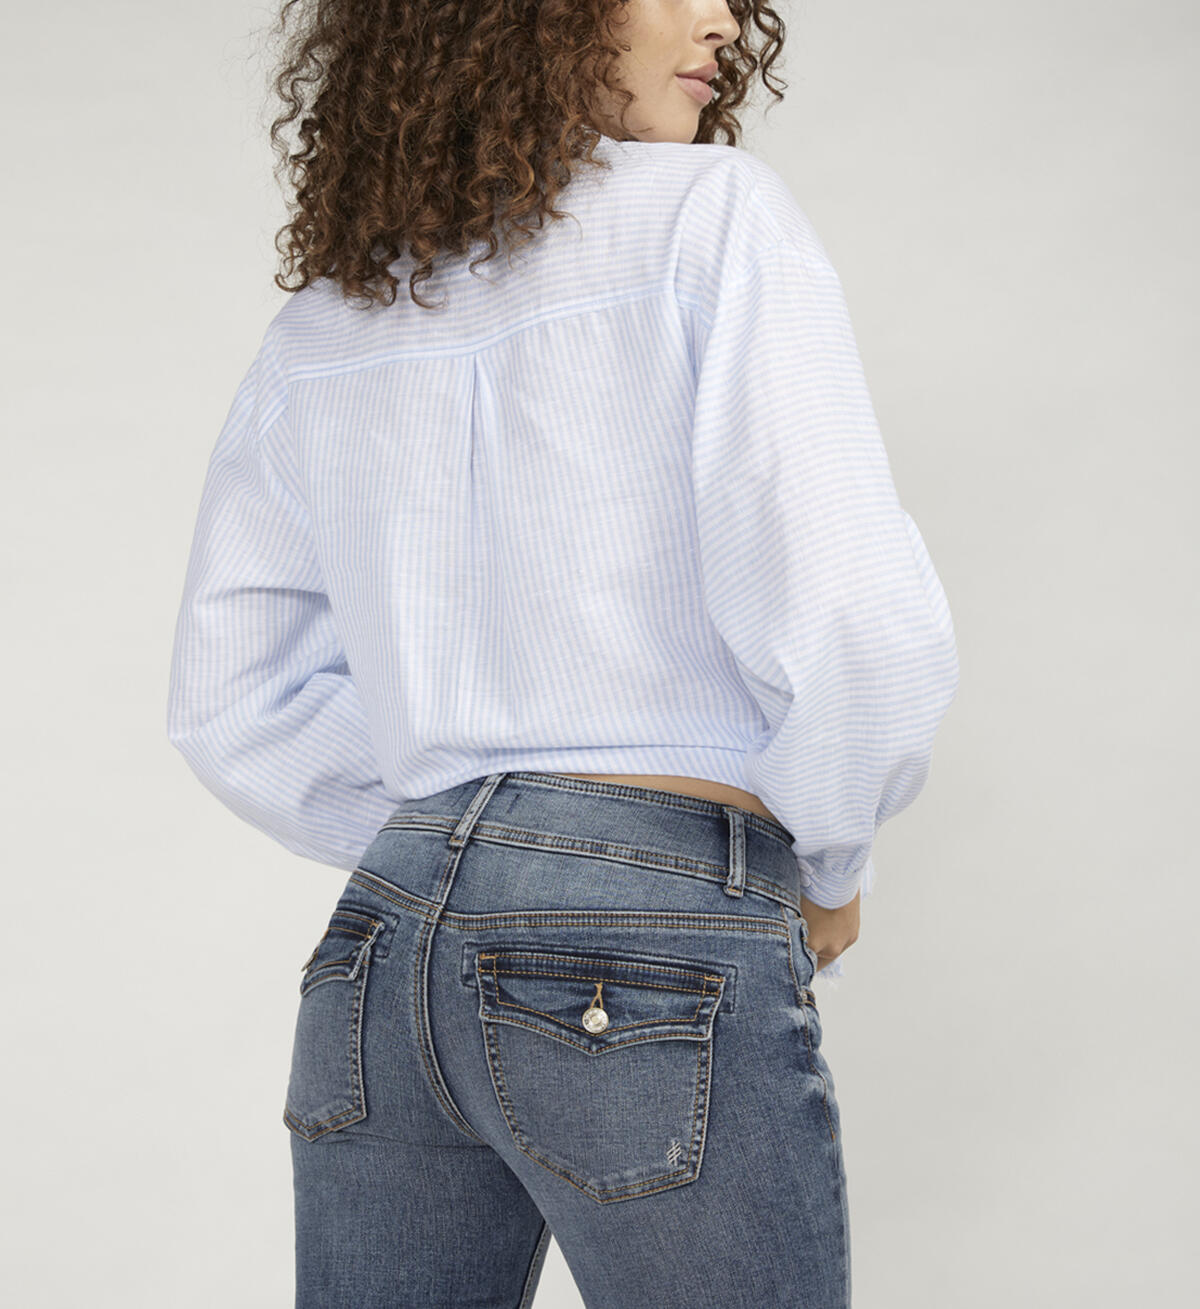 Suki Mid Rise Slim Bootcut Jeans, Indigo, hi-res image number 3